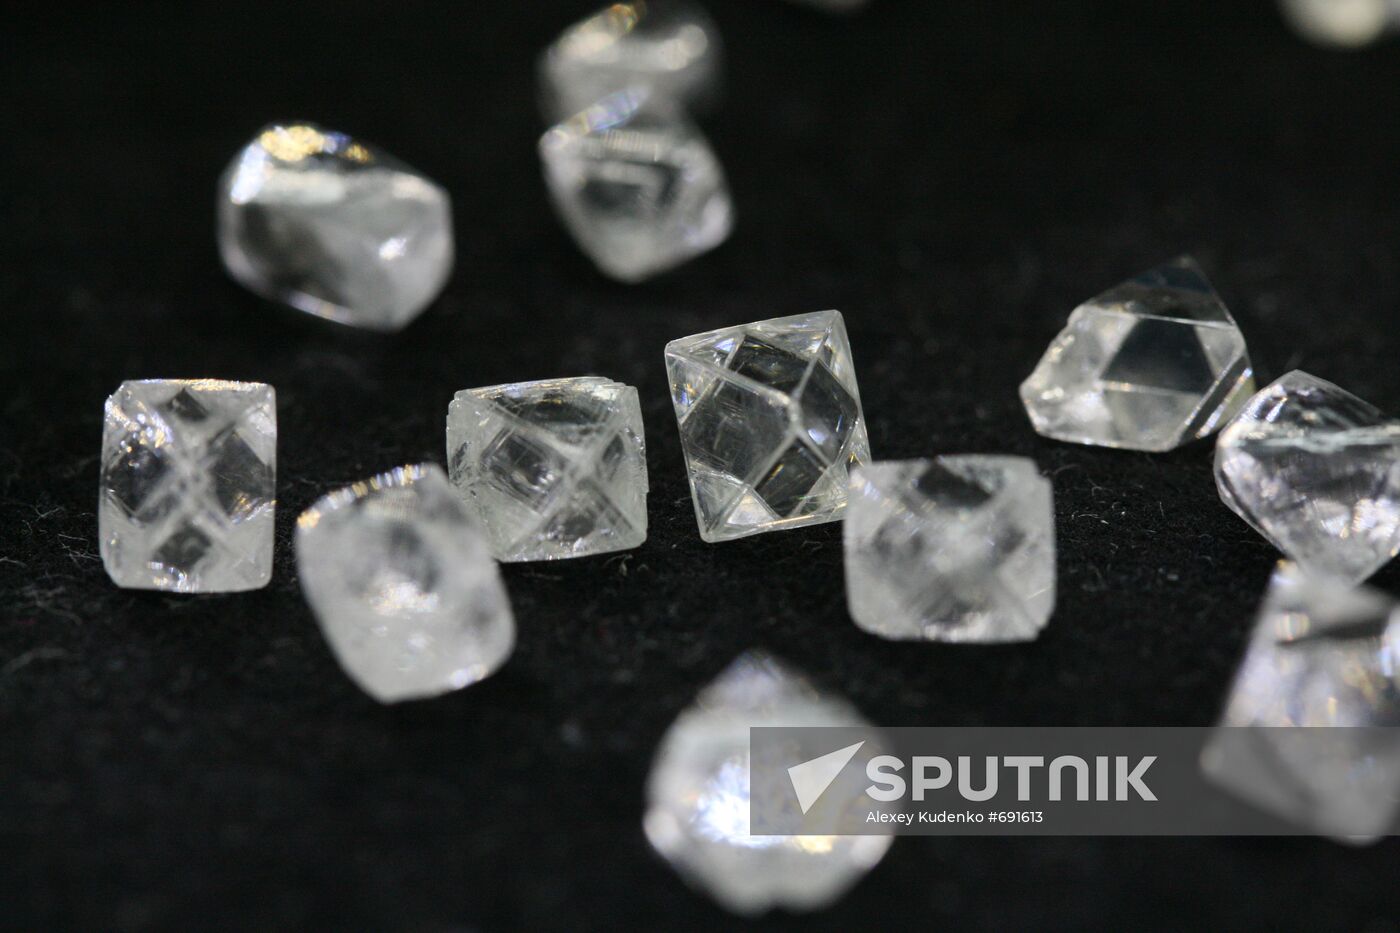 Kristall diamond polishing company in Smolensk